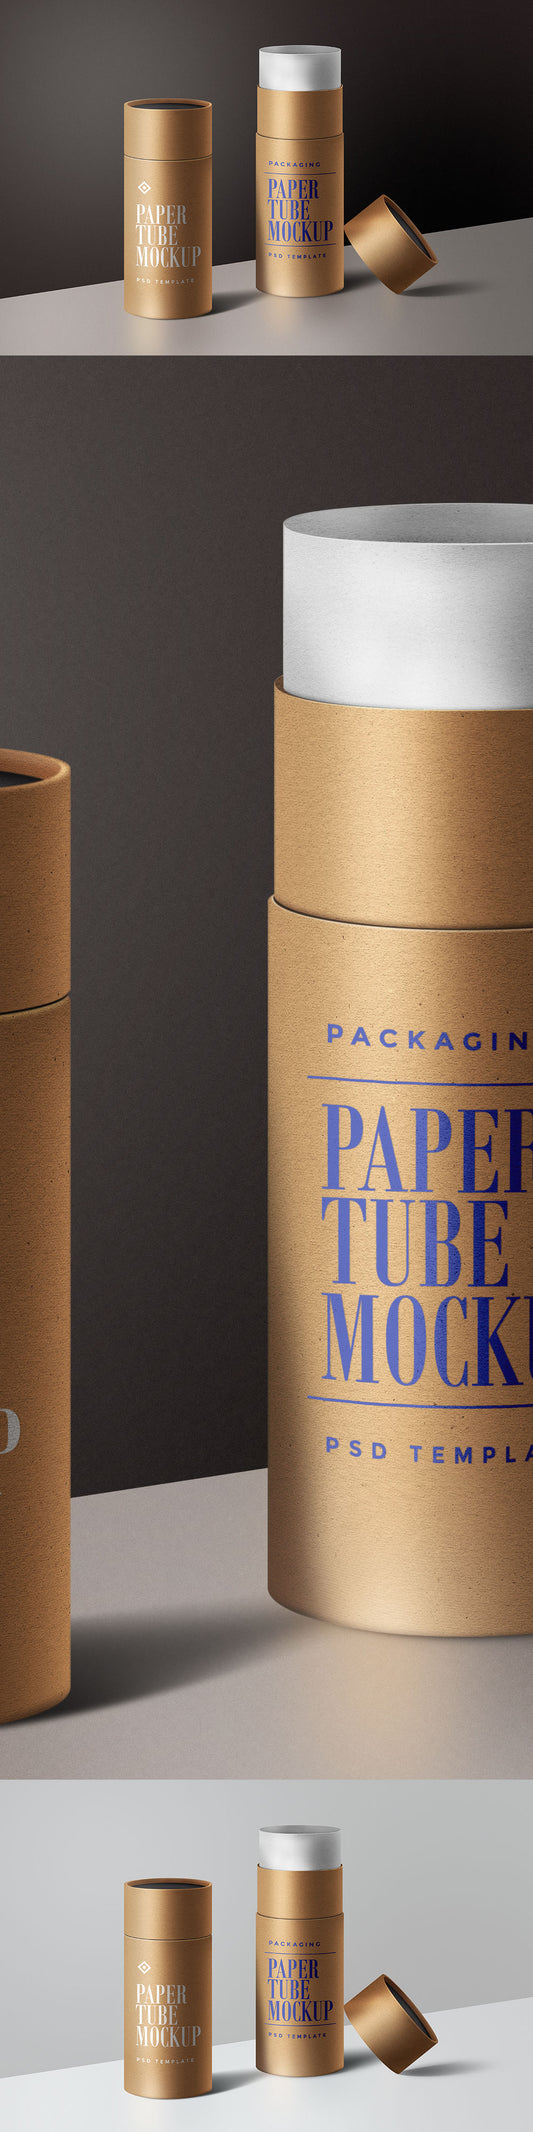 Free Paper Tube Packaging Mockup Template